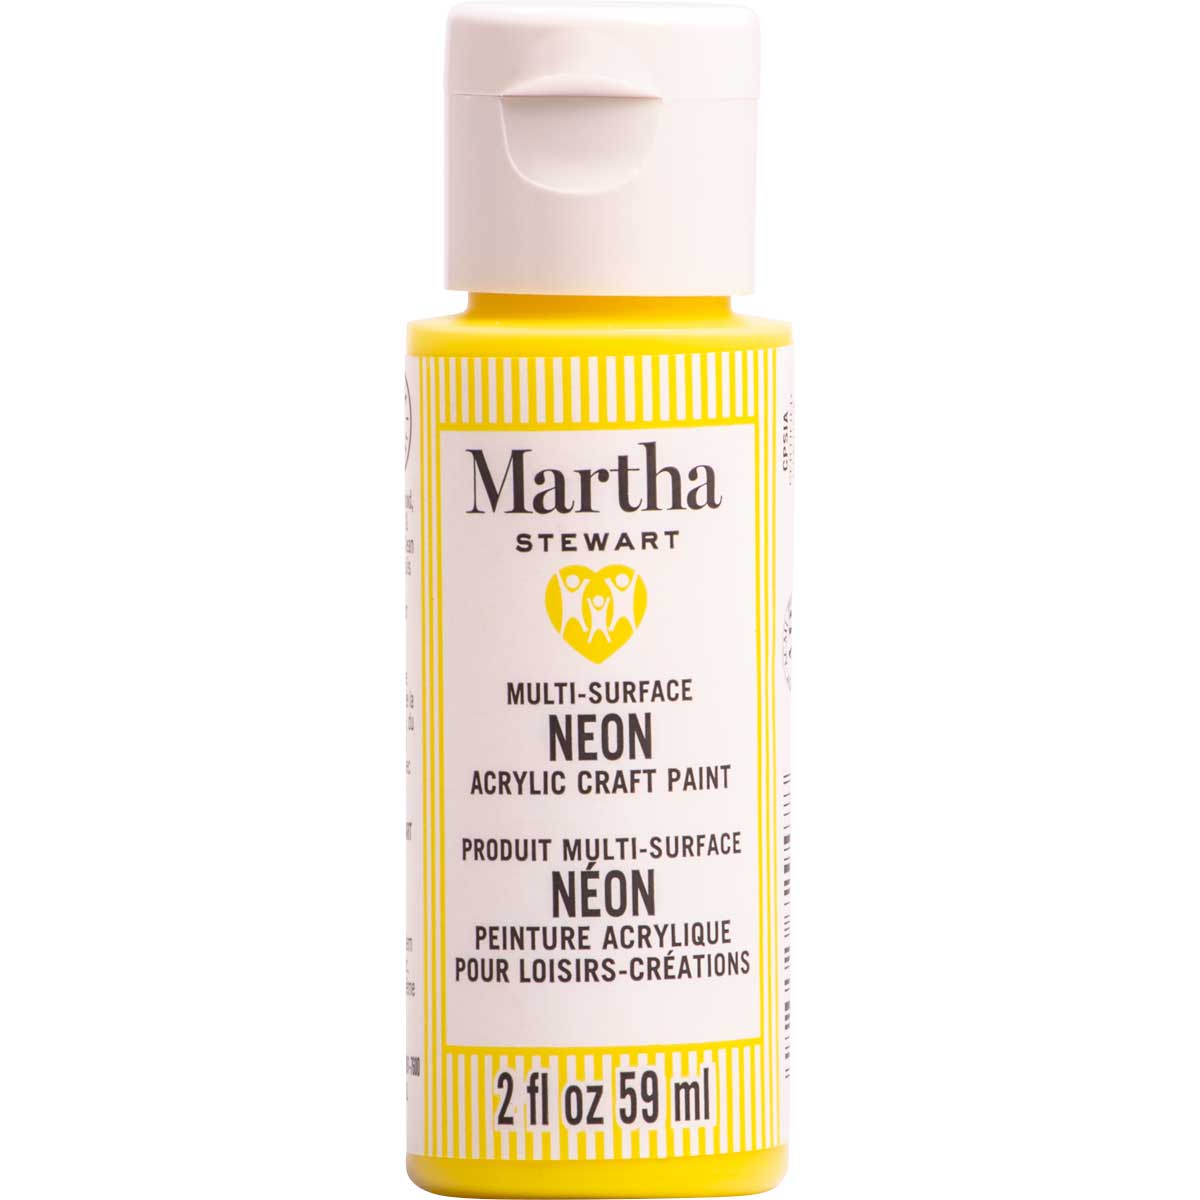 Martha Stewart ® Multi-Surface Neon Acrylic Craft Paint CPSIA - Pineapple Yellow, 2 oz. - 72947